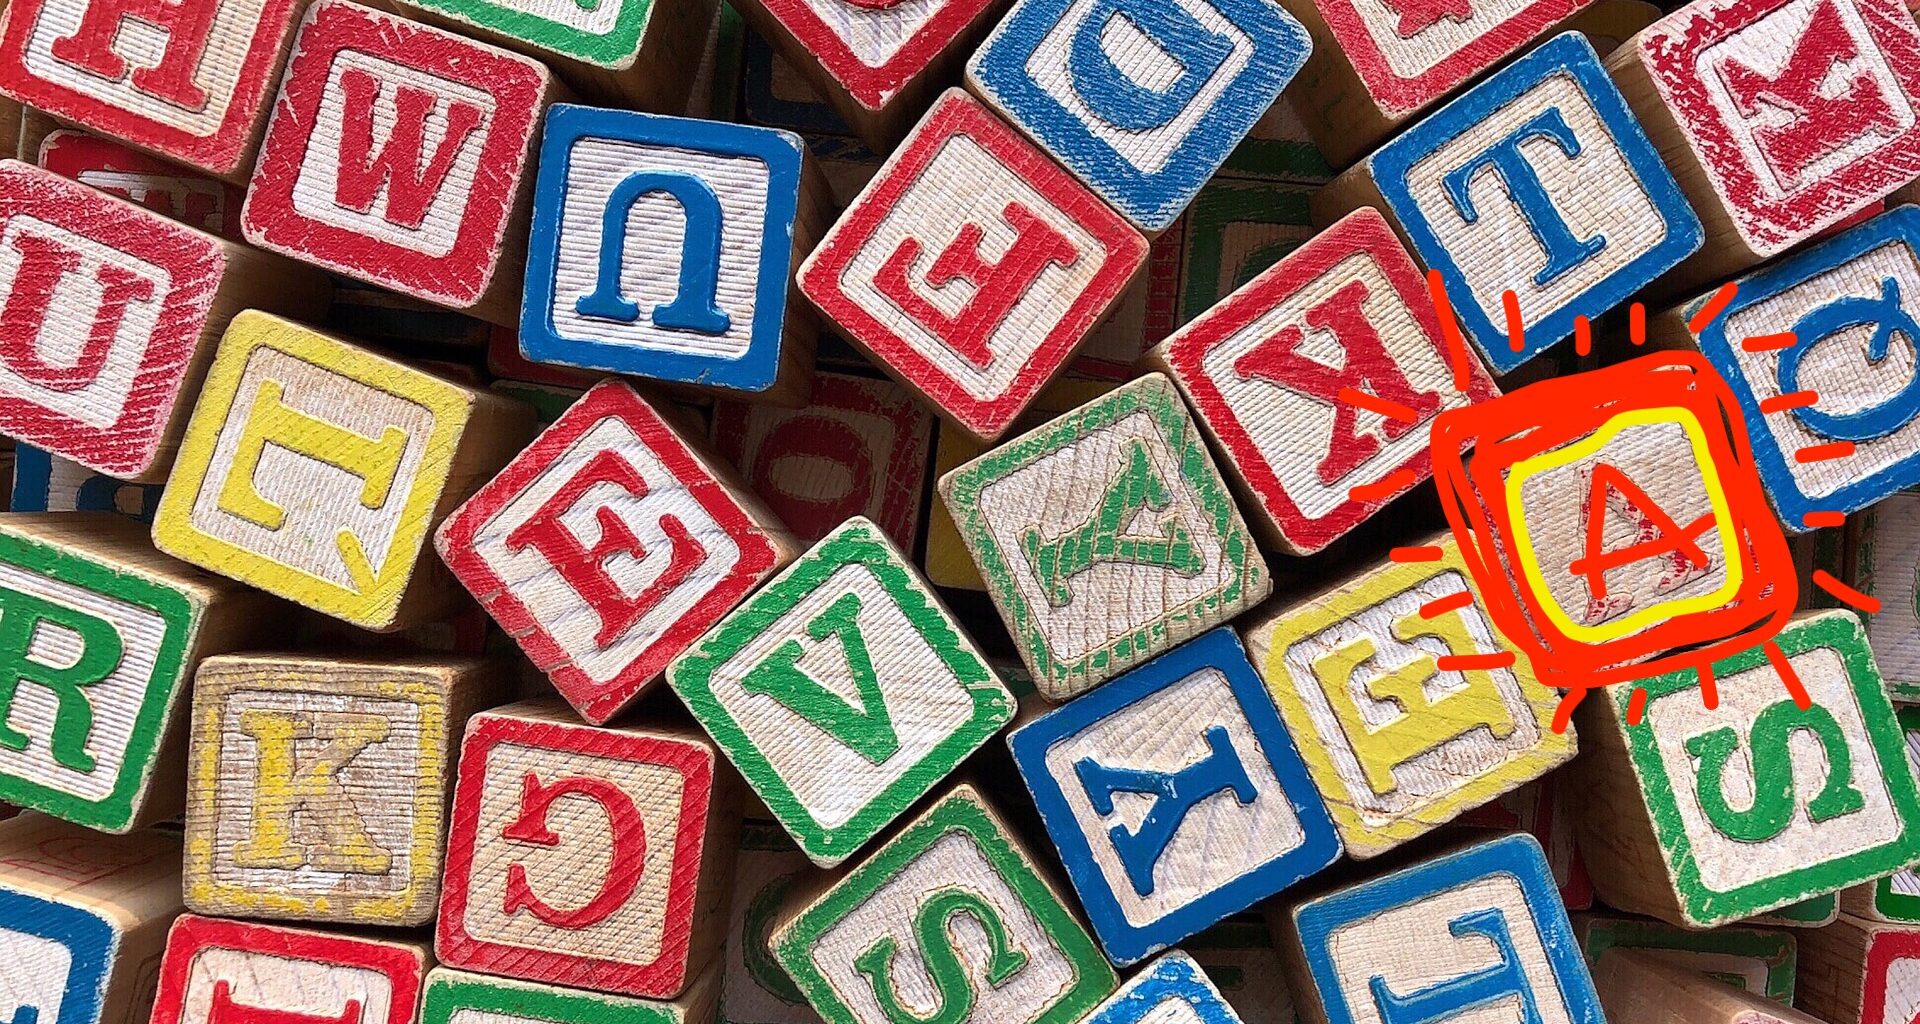 Toy letter blocks